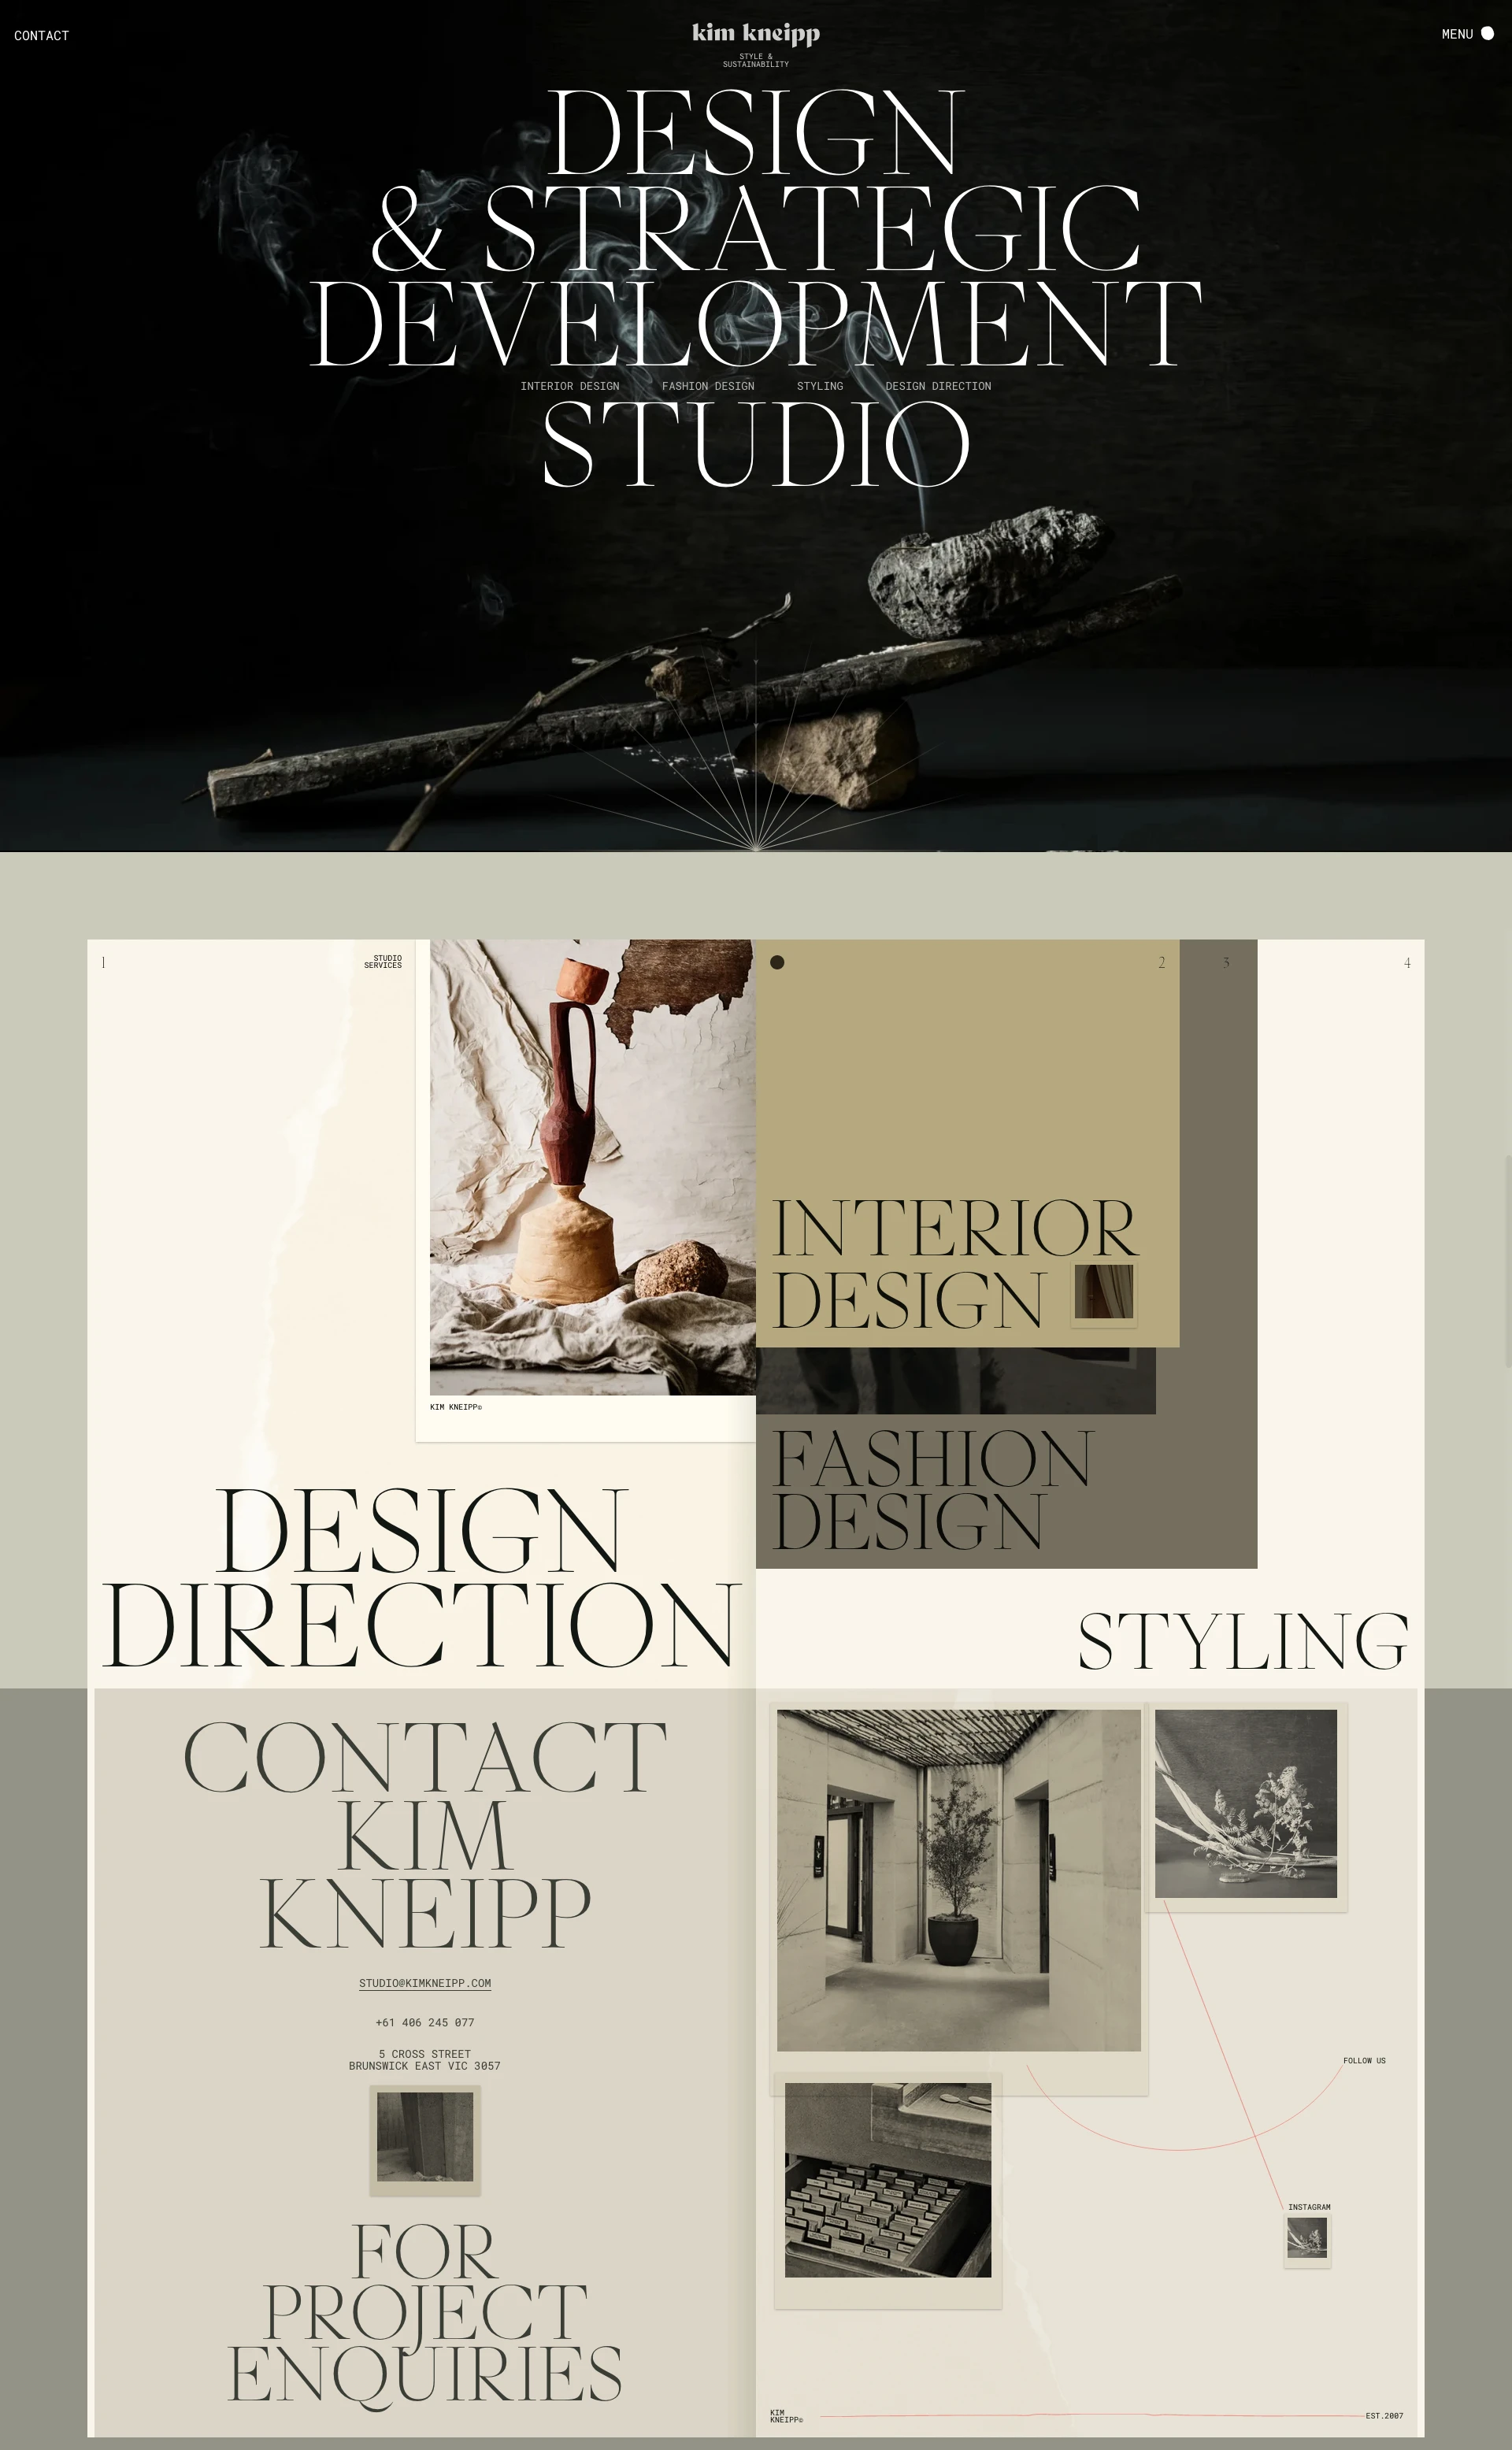 Kim Kneipp Landing Page Example: Design & strategic development studio.